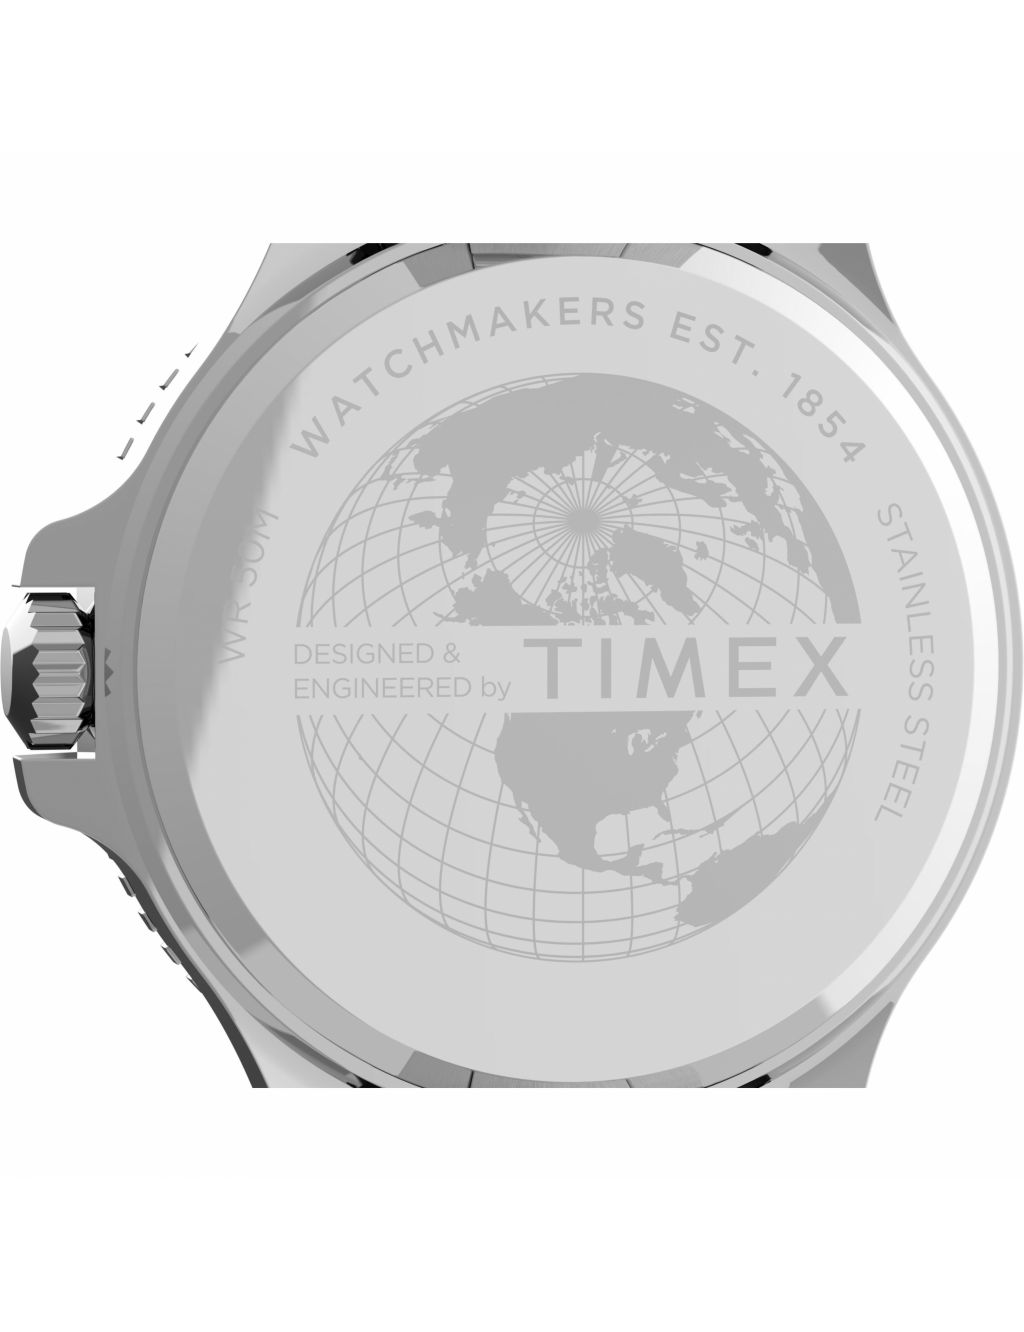 Timex Metropolitan Stainless Steel Chronograph Watch image 3